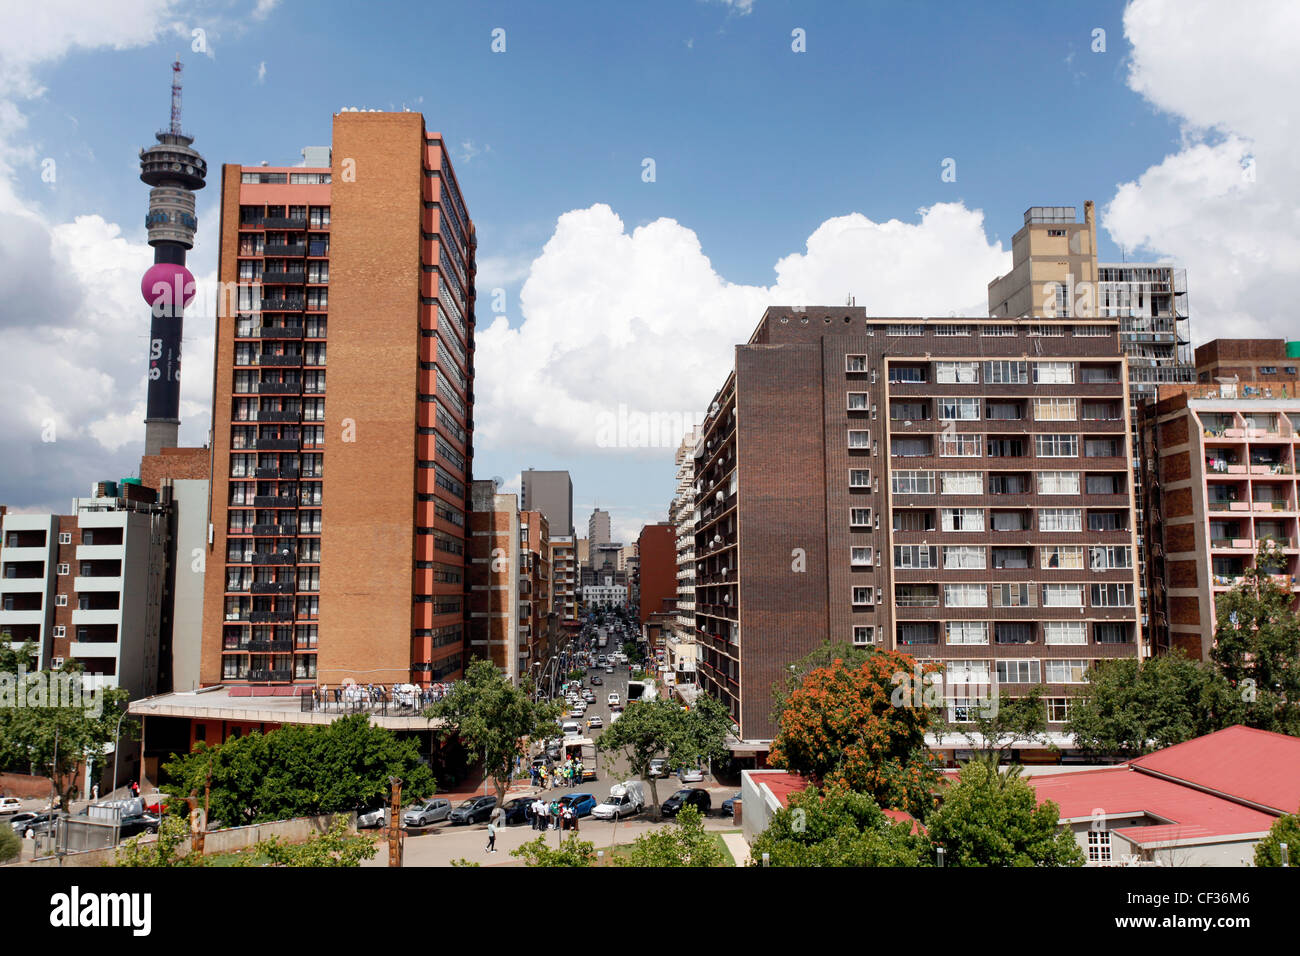 Hillbrow is the inner city residential neighbourhood of Johannesburg, Gauteng Province, South Africa. Stock Photo